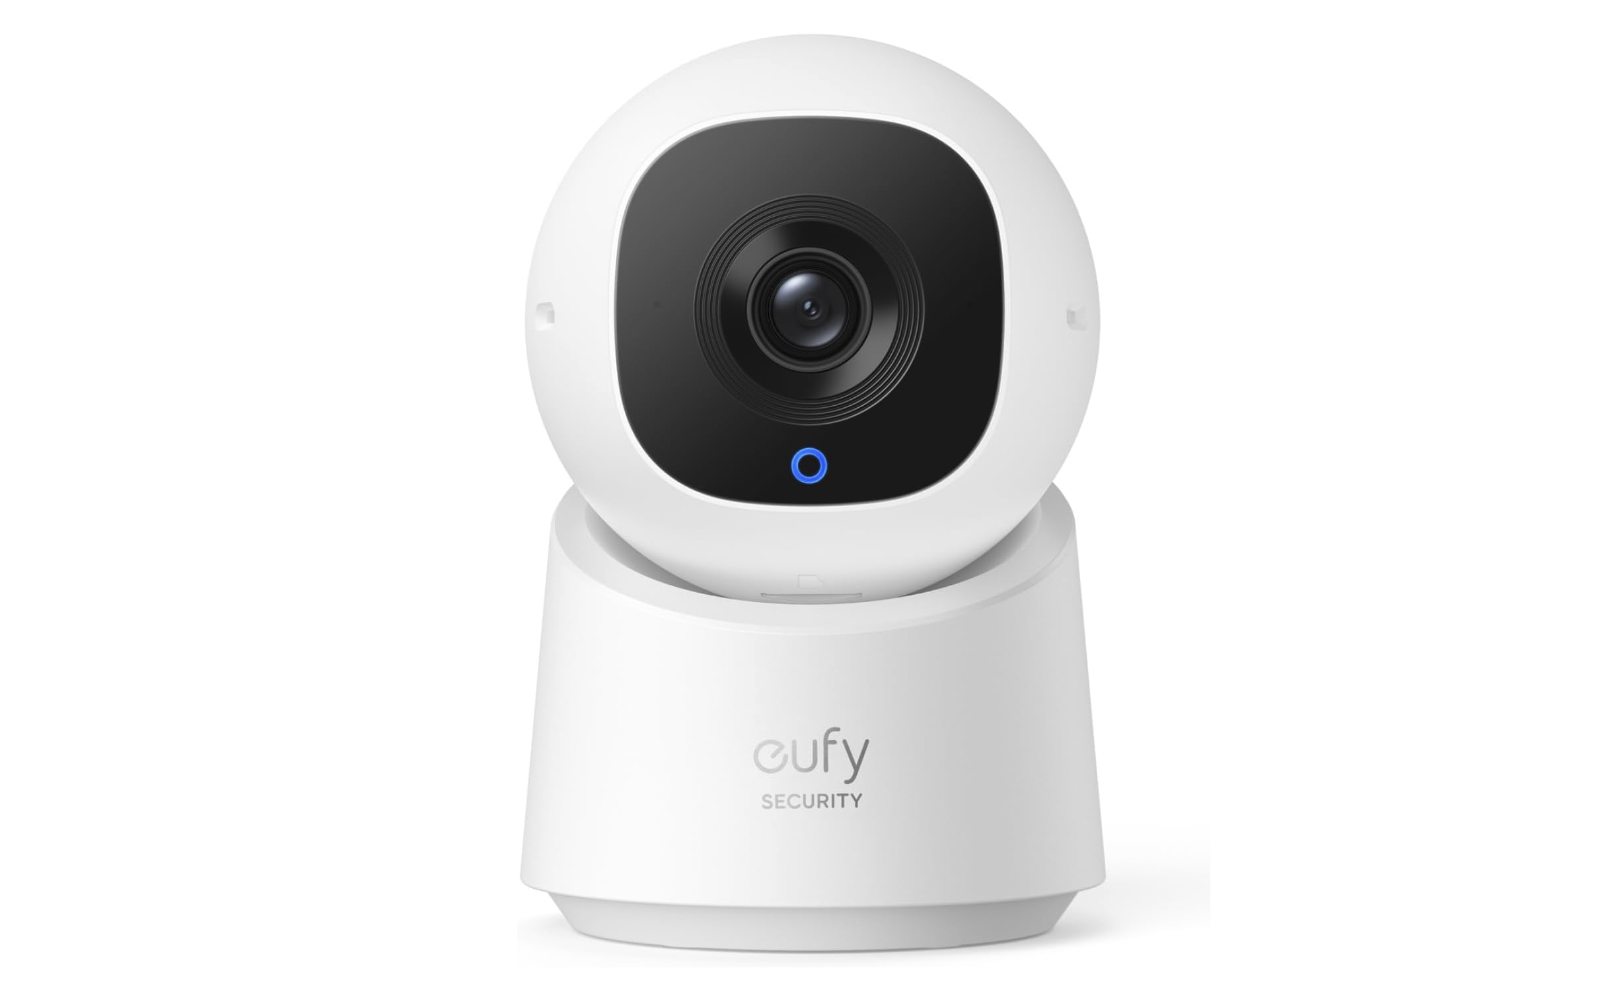 Eufy Security camera